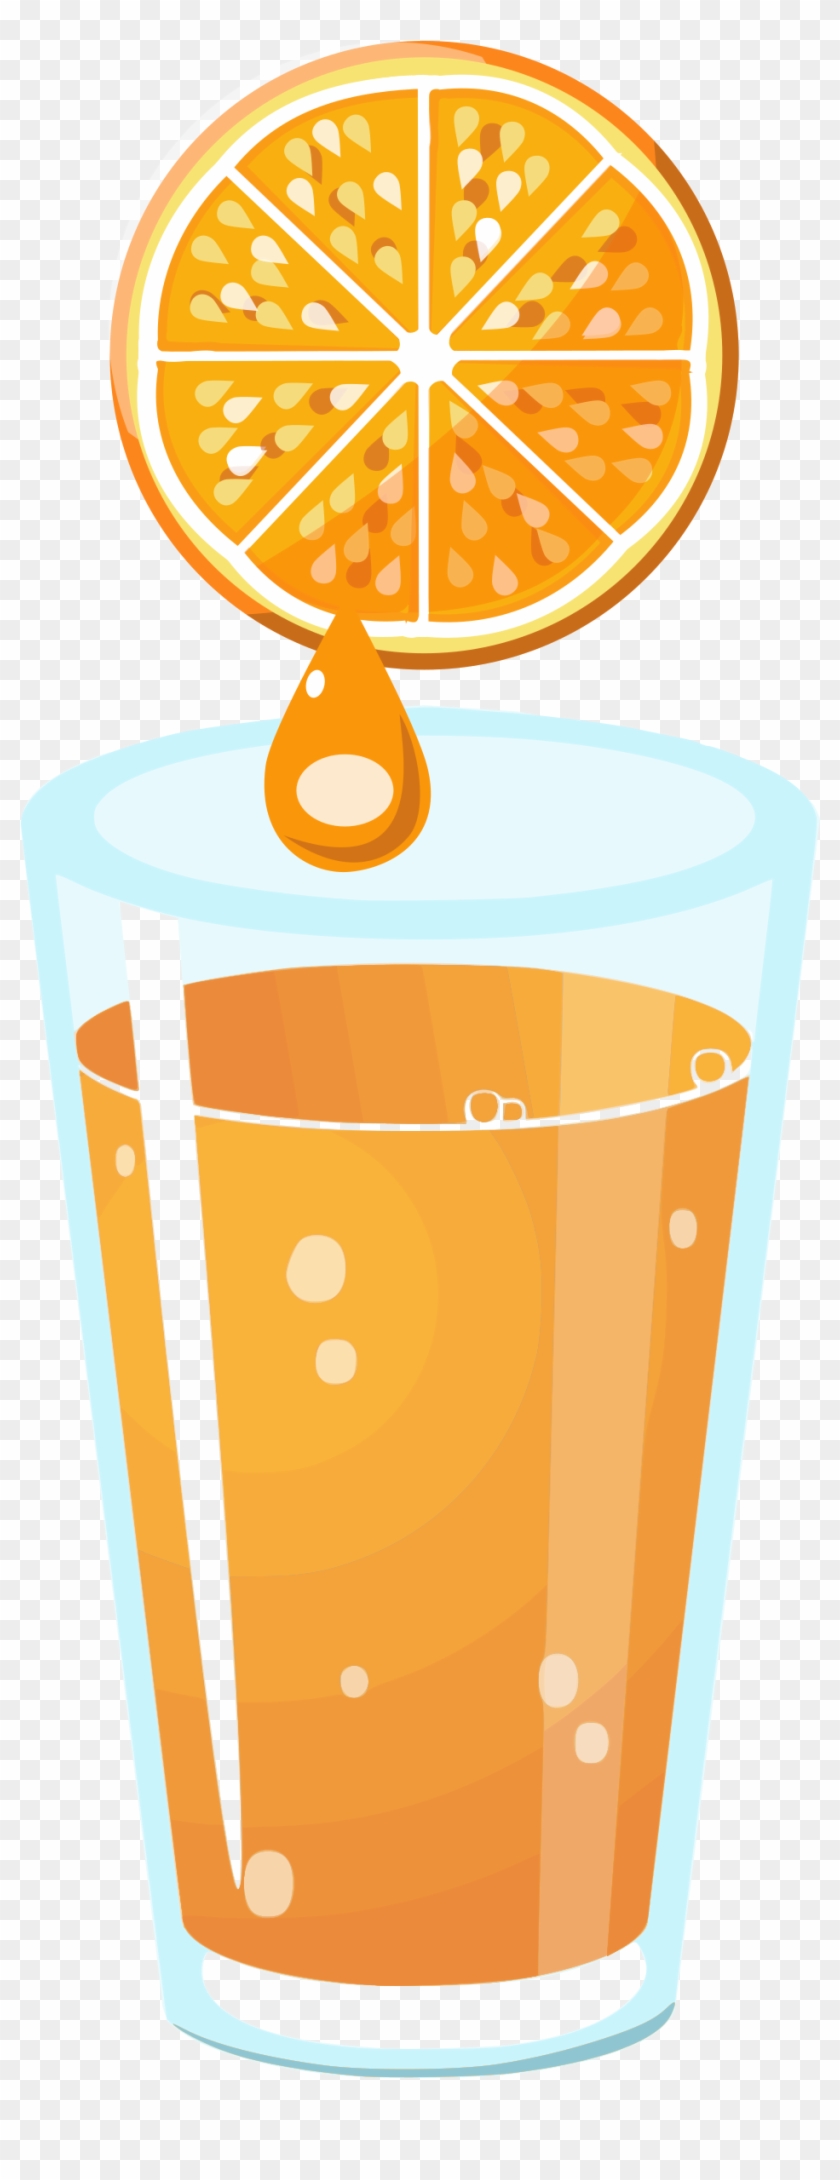 This Free Icons Png Design Of Orange Juice - Fresh Squeezed Orange Juice Art #525526